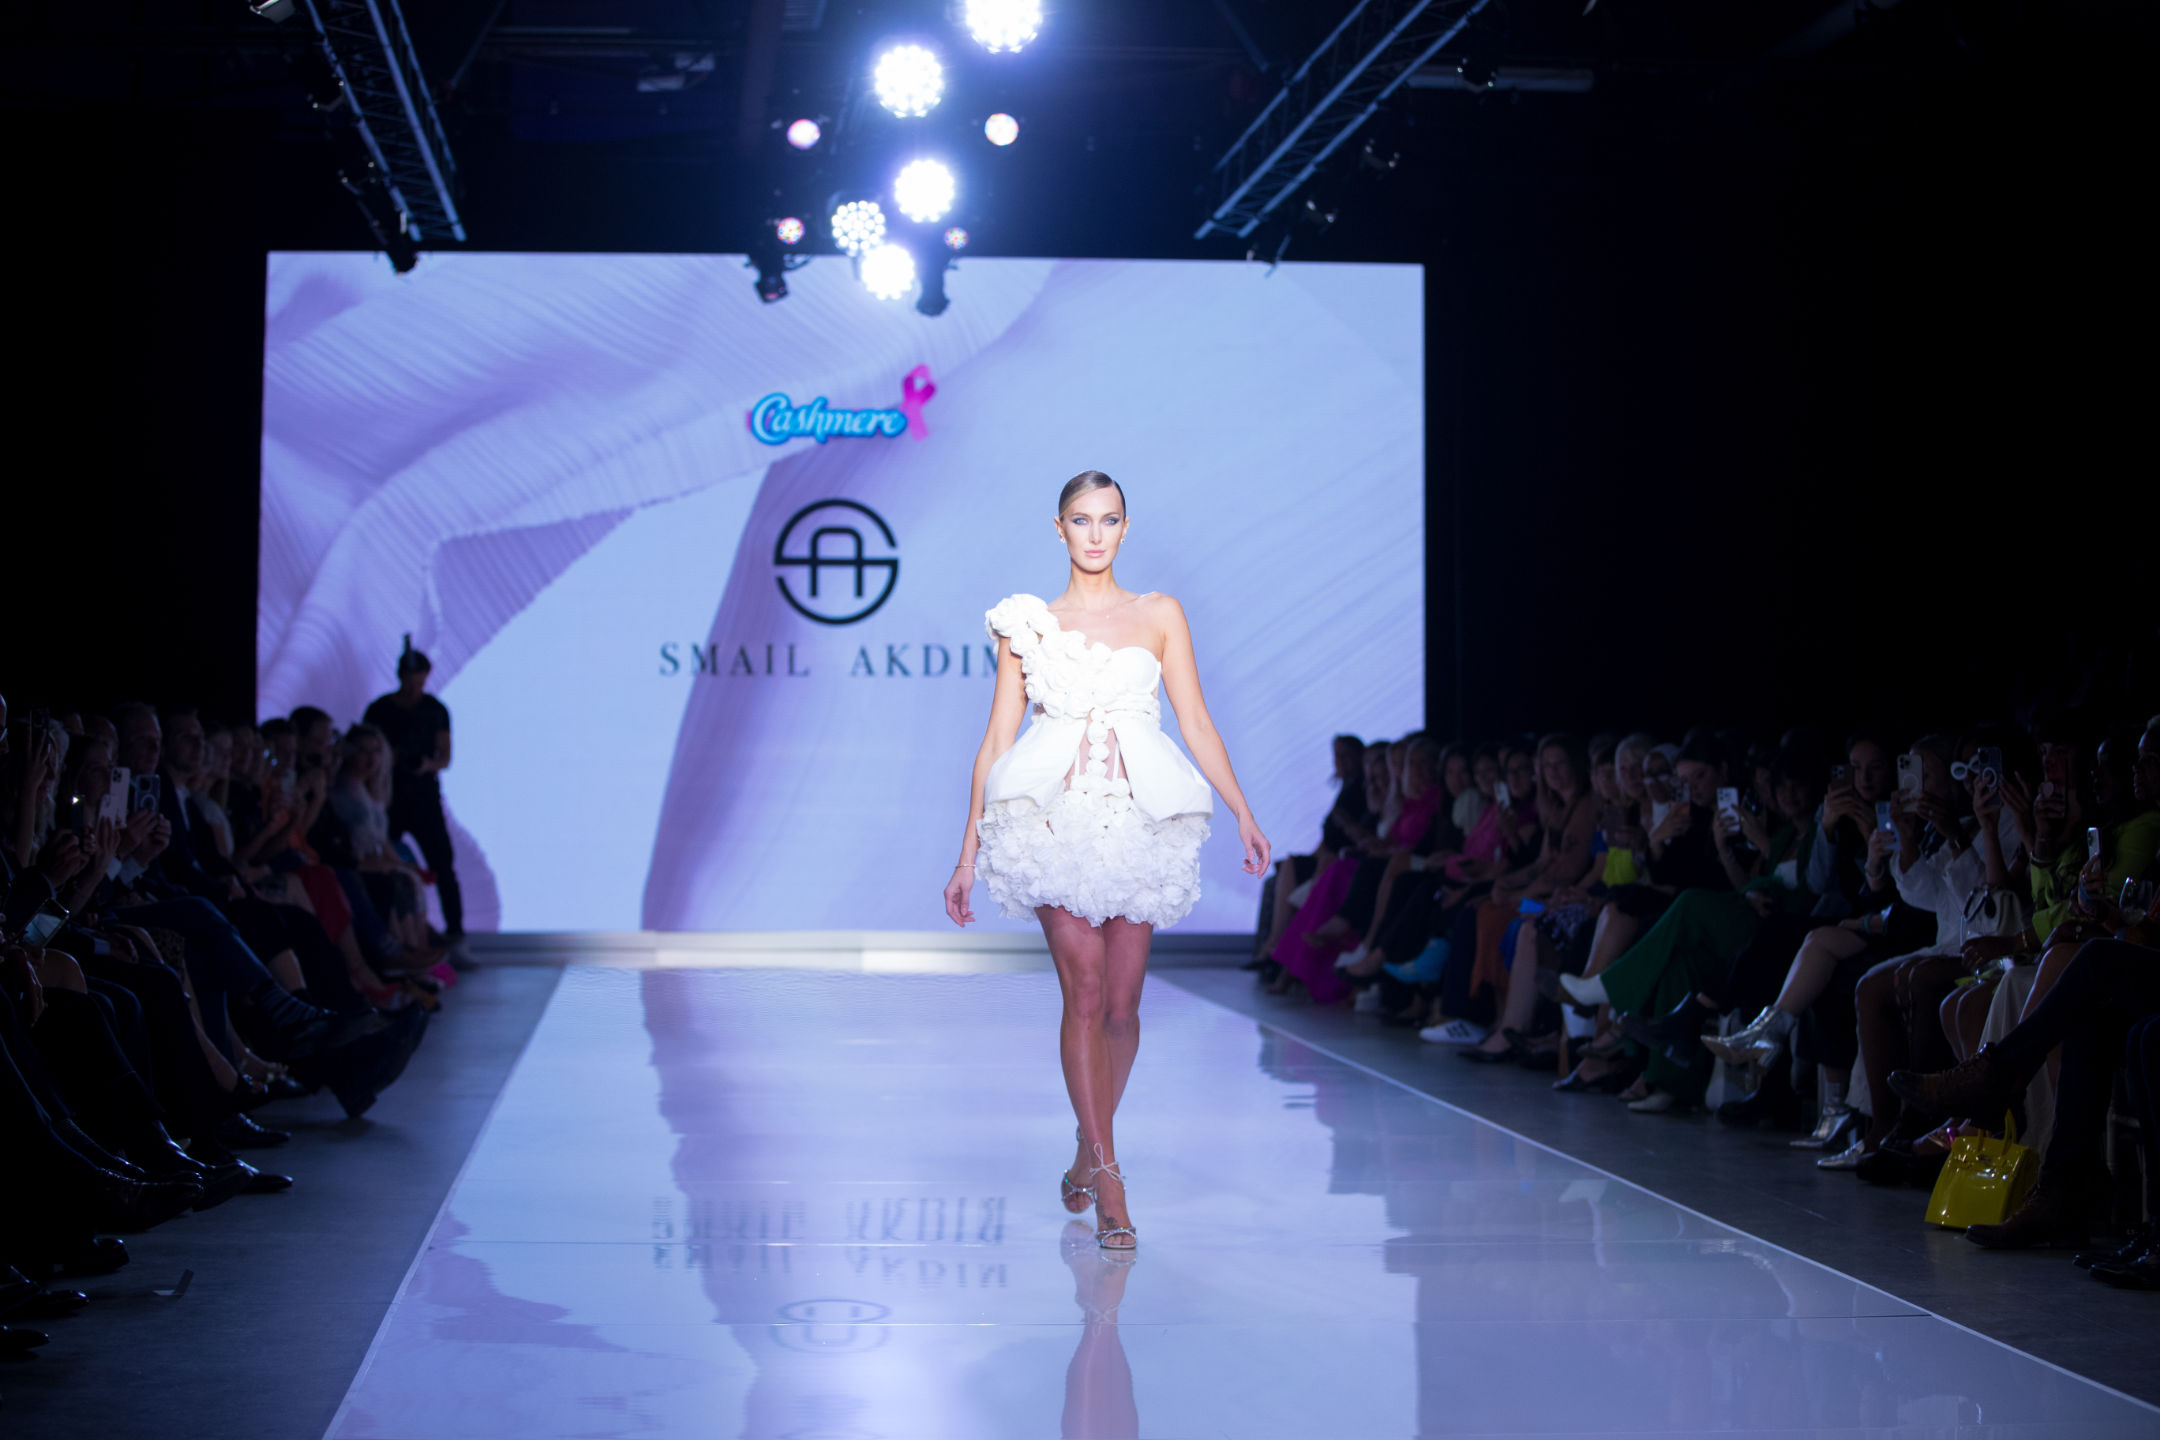 A model walking down a runway in a white dress